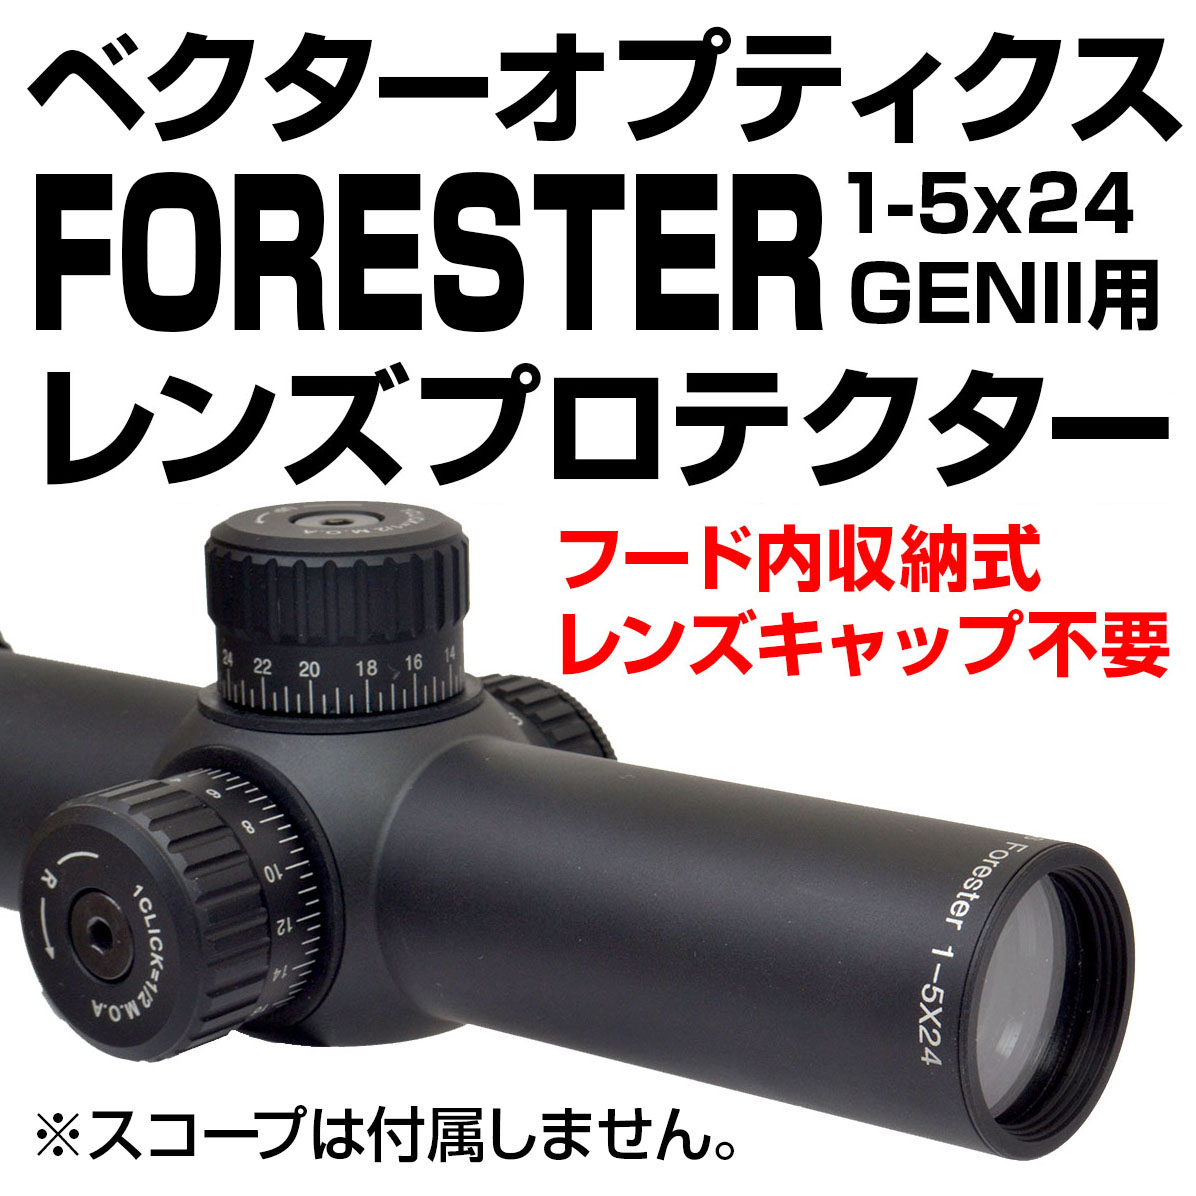 VectorOptics Forester 1-5x24 GenII